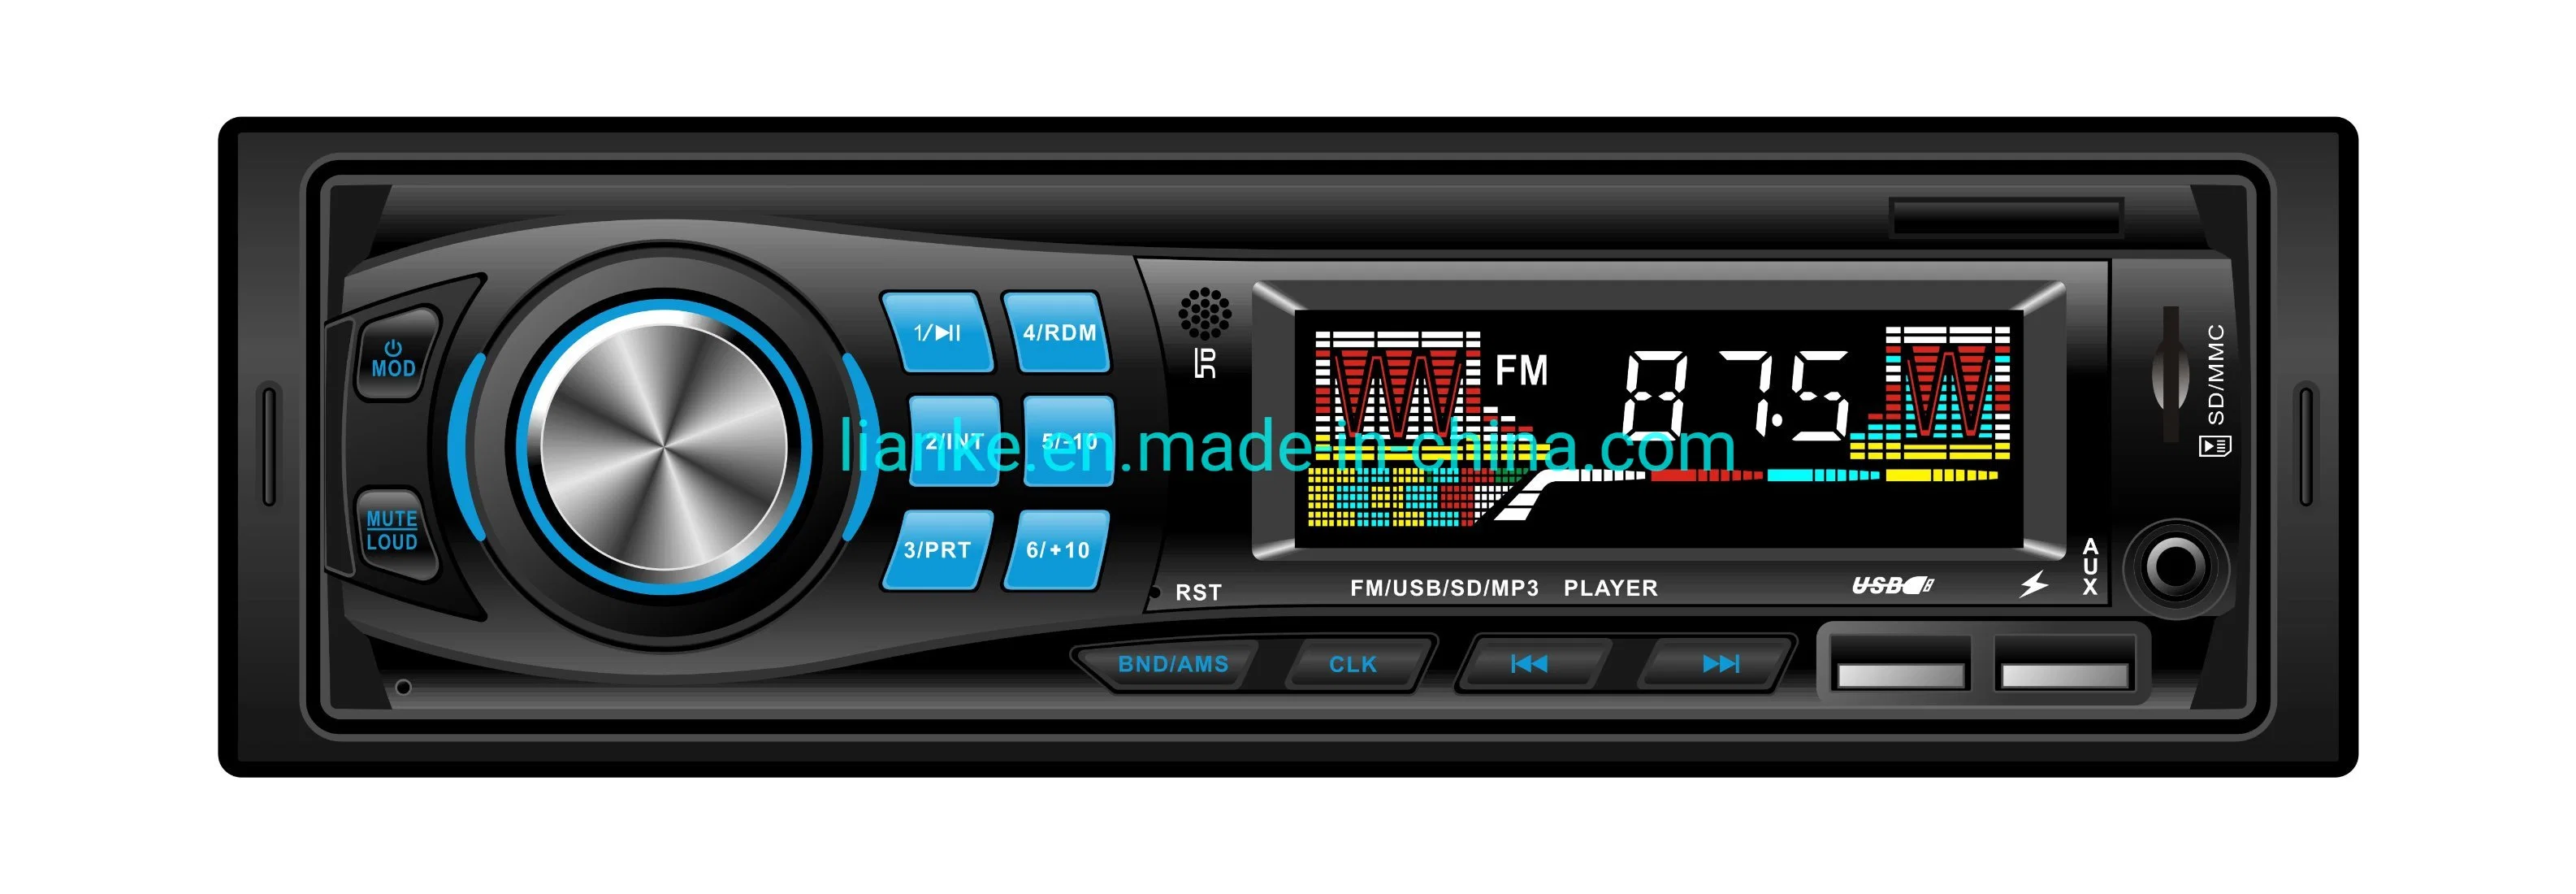 Alquiler de audio de MP3 Reproductor Multimedia con USB/FM